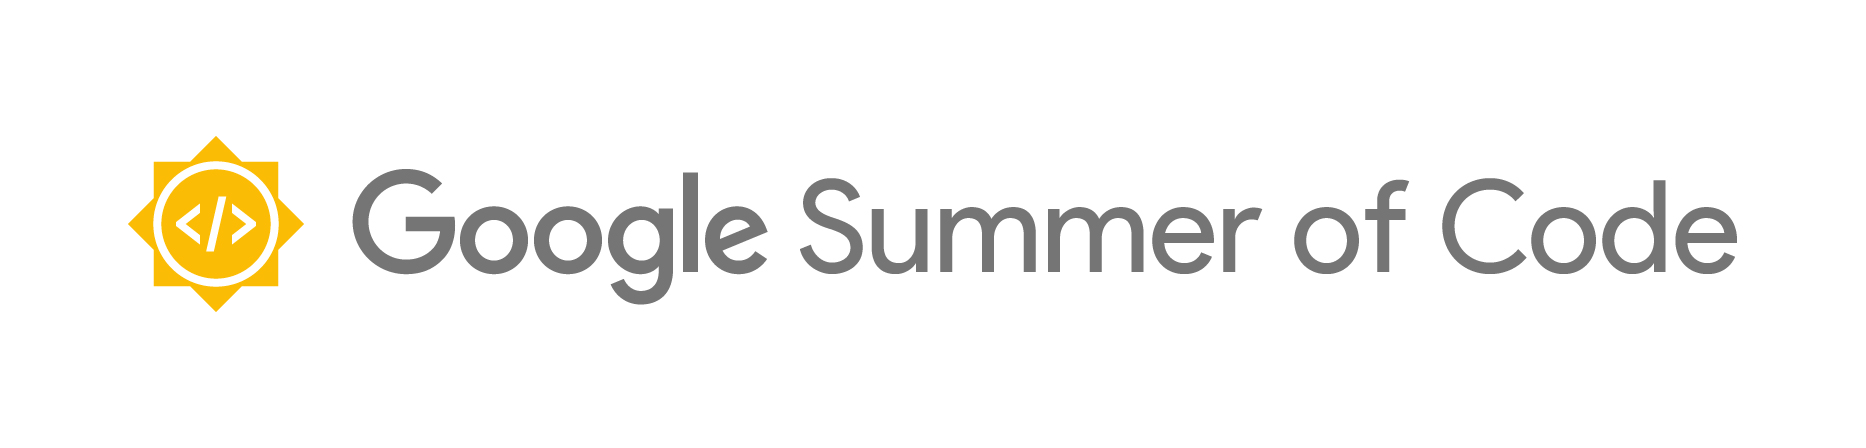 Google Summer of Code banner logo